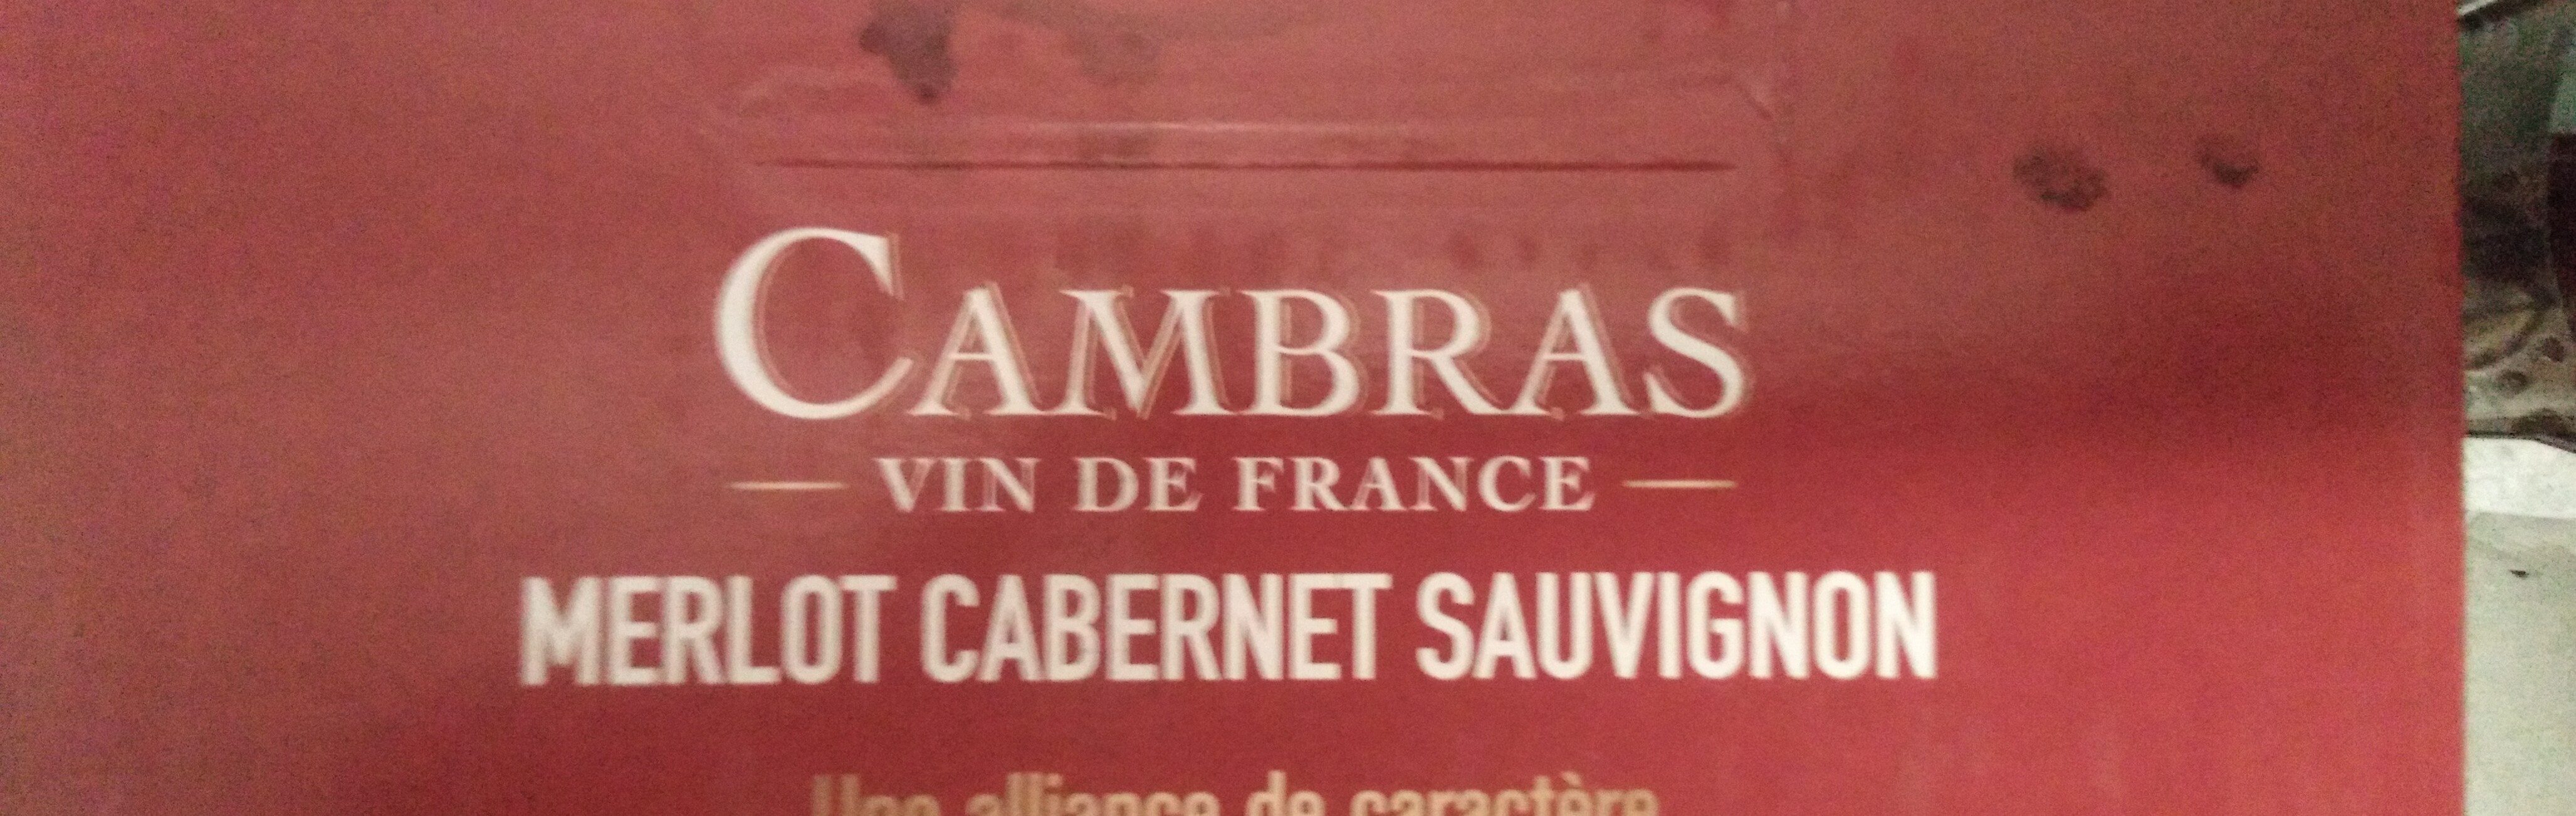 Vin de France Merlot Cabernet Sauvignon - المكونات - fr